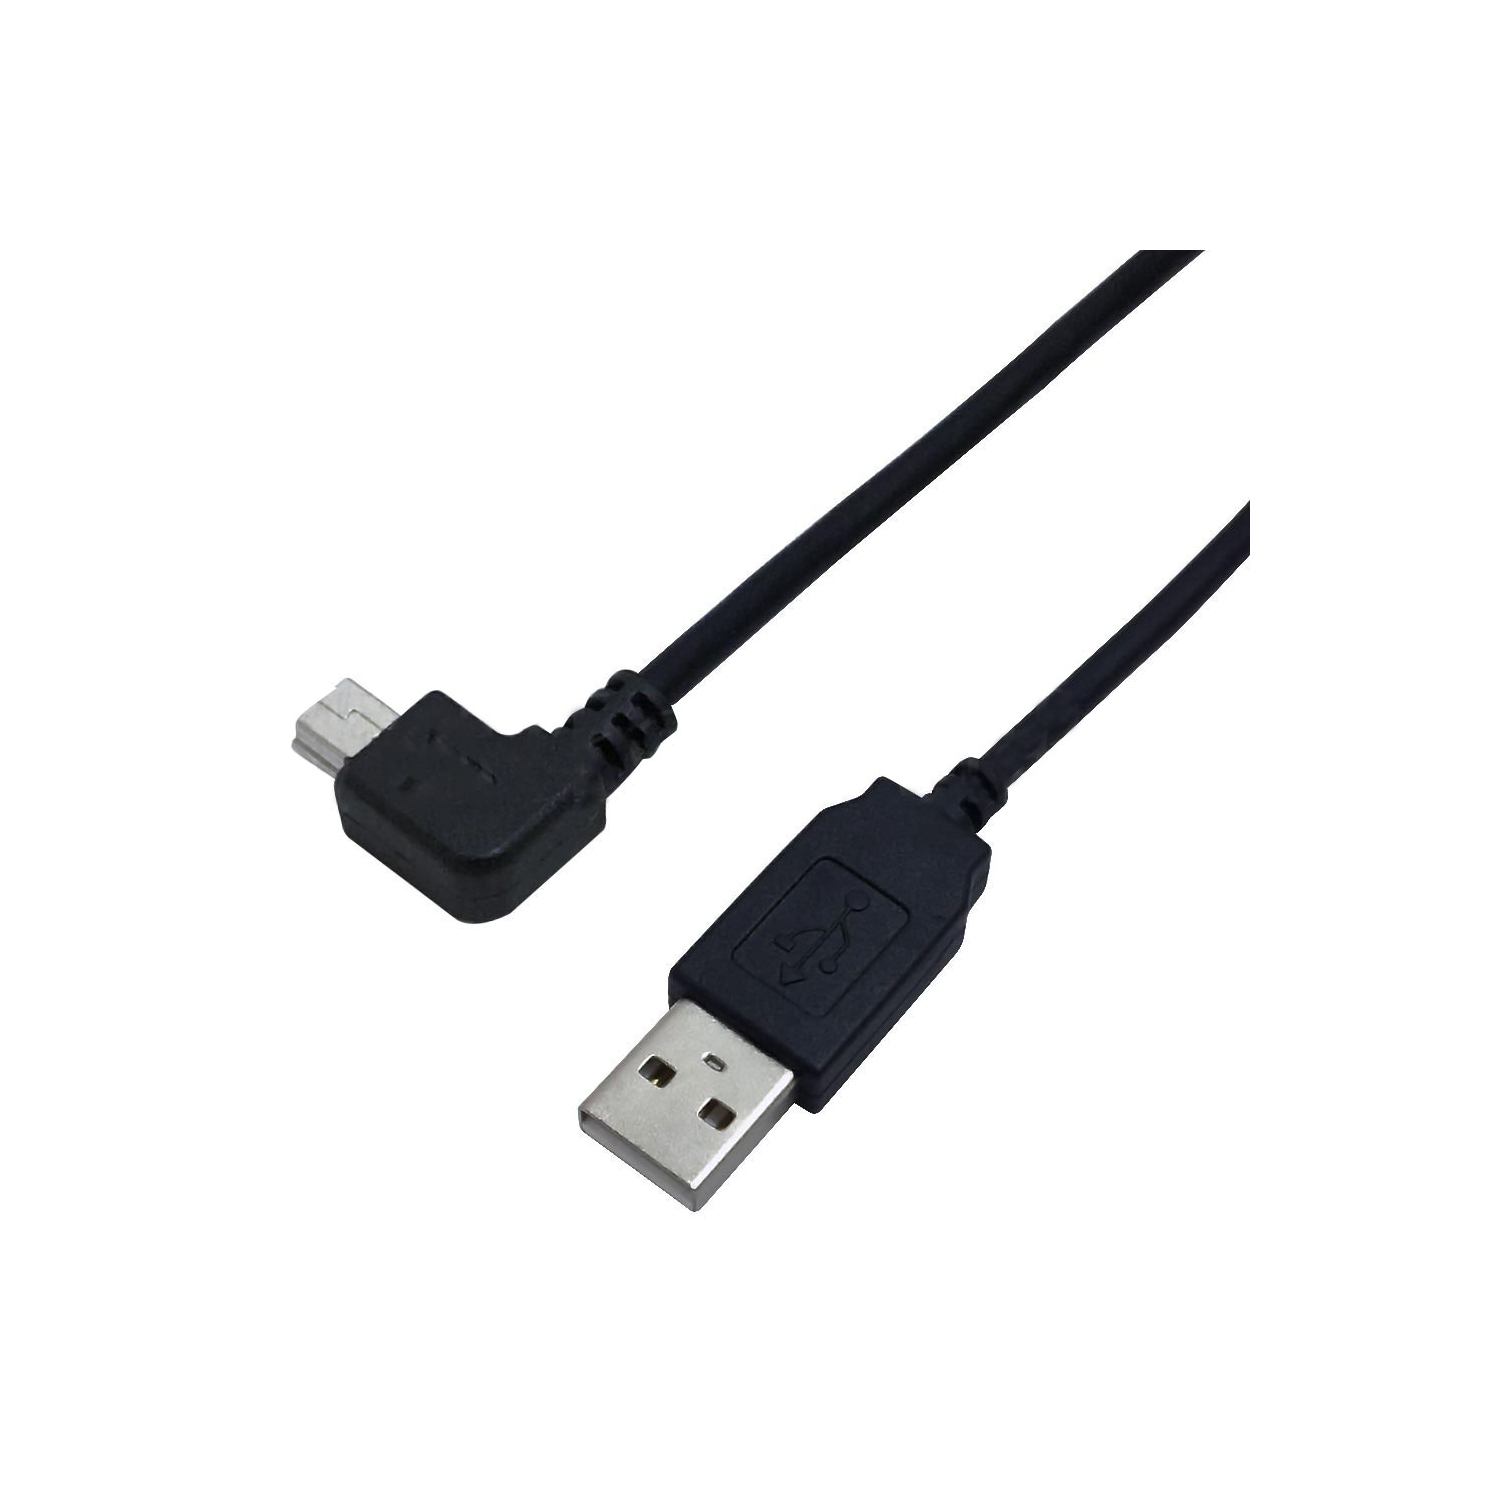 Free Shipping! HYFAI USB 2.0 A Straight Male to Mini-B 5-Pin Mini USB Left Angle Male Cable, 15 ft